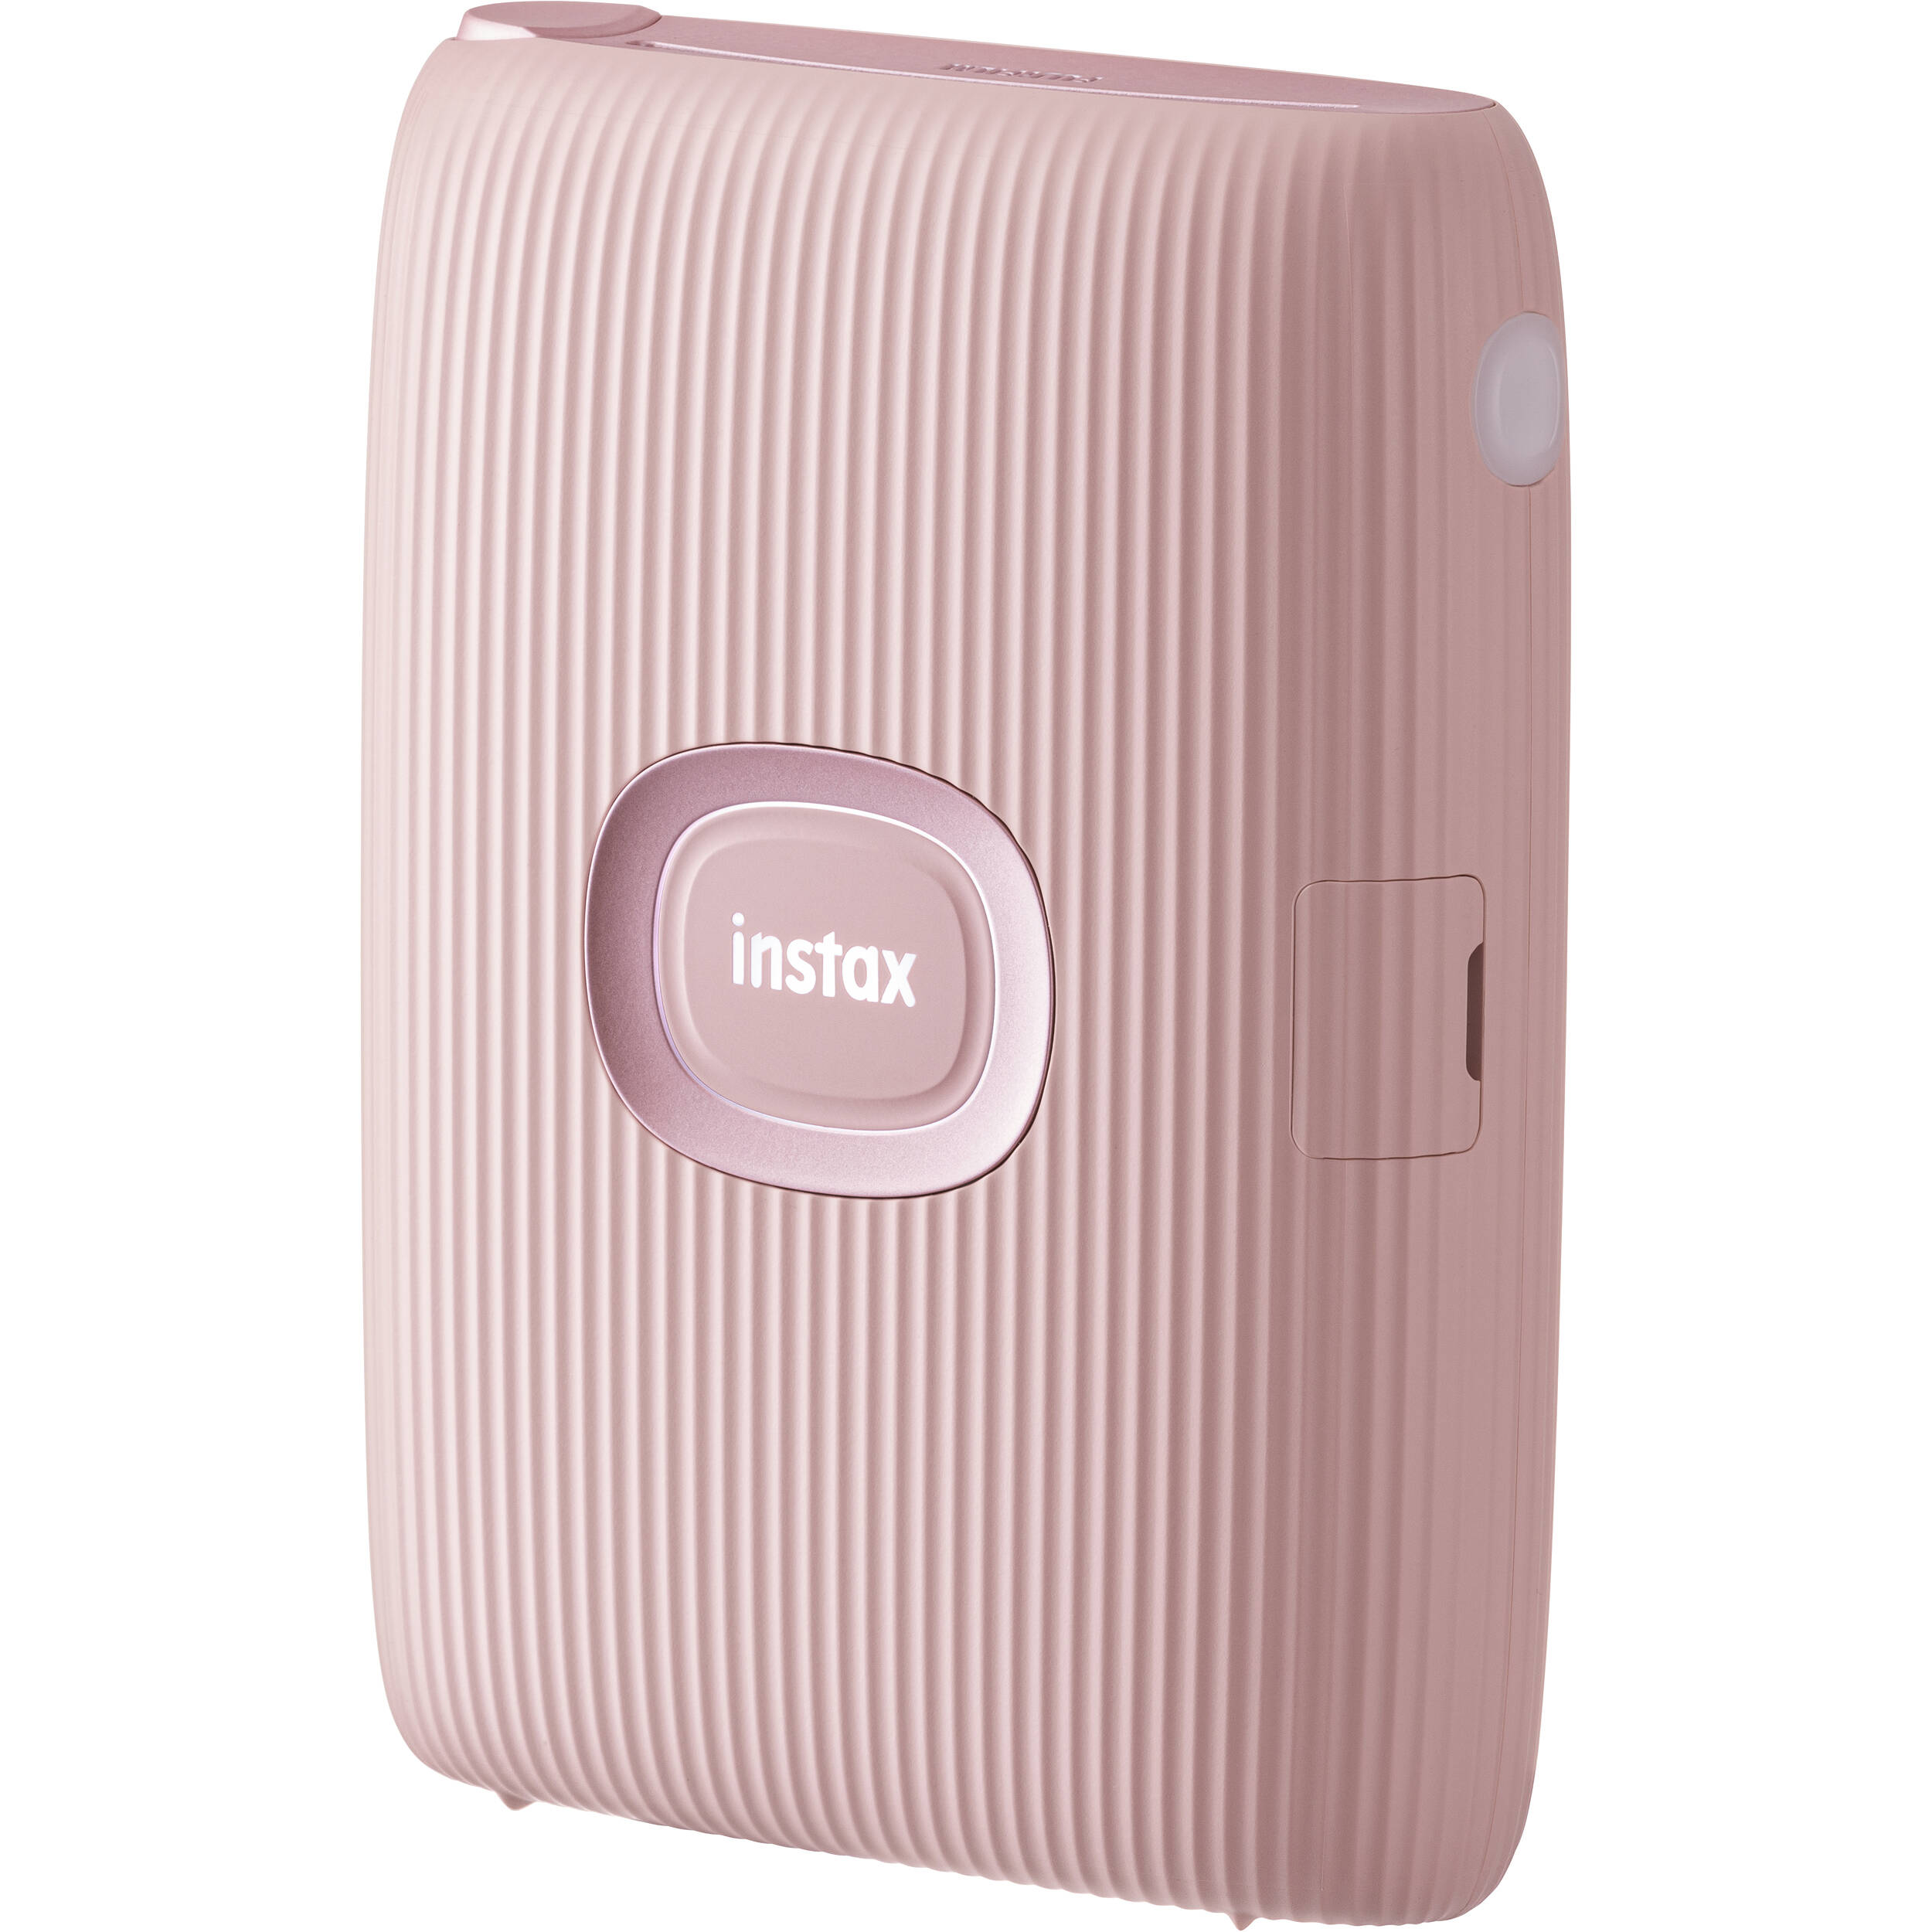 Fujifilm INSTAX Mini 2 Smartphone Printer Pink)